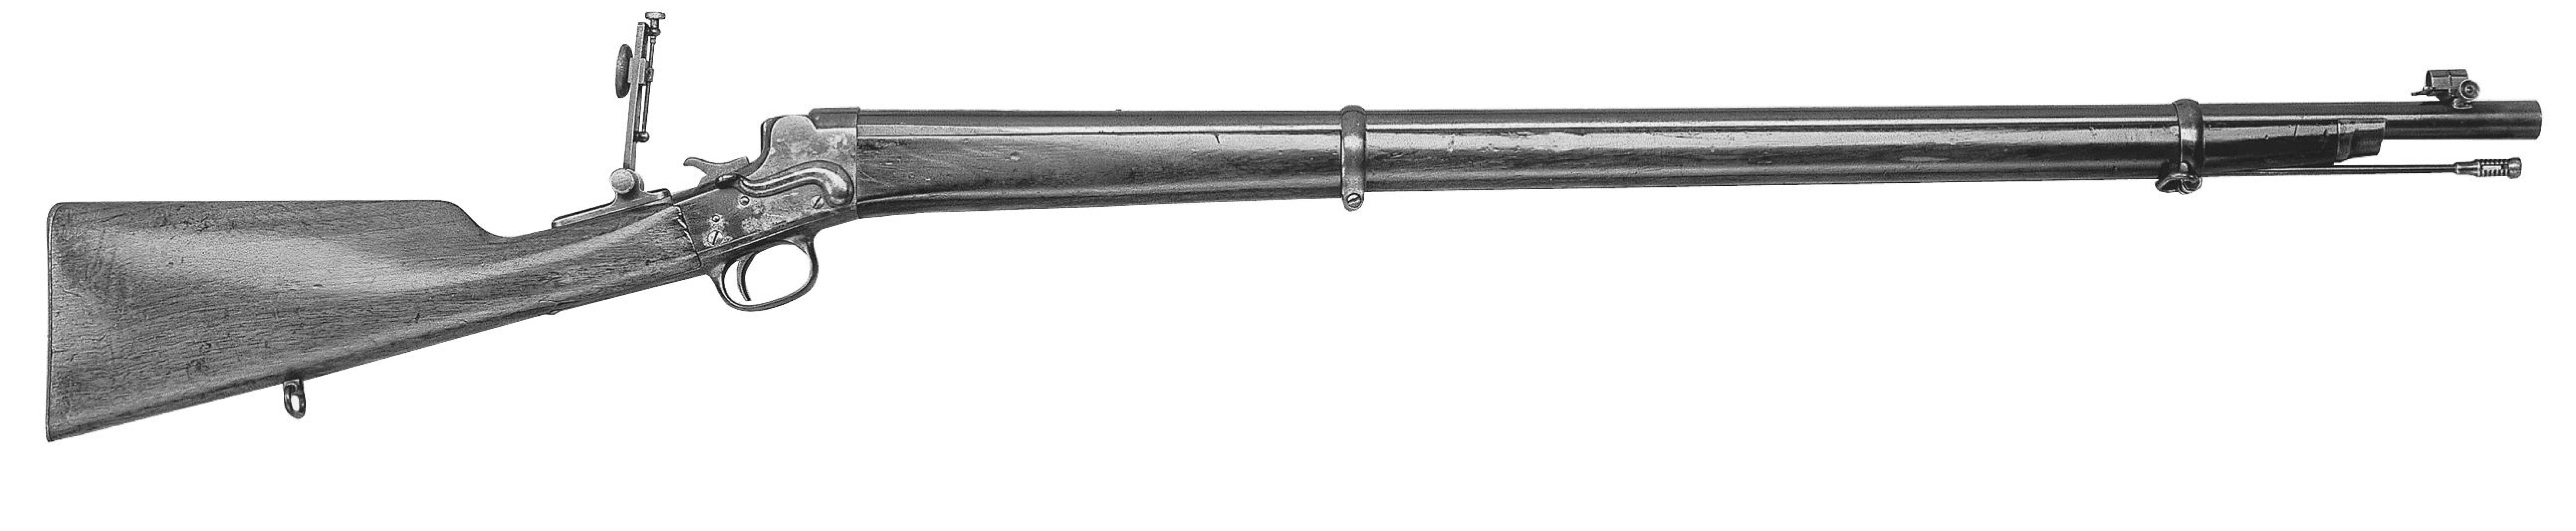 Remington-Hepburn No. 3 Long-Range Military Rifle